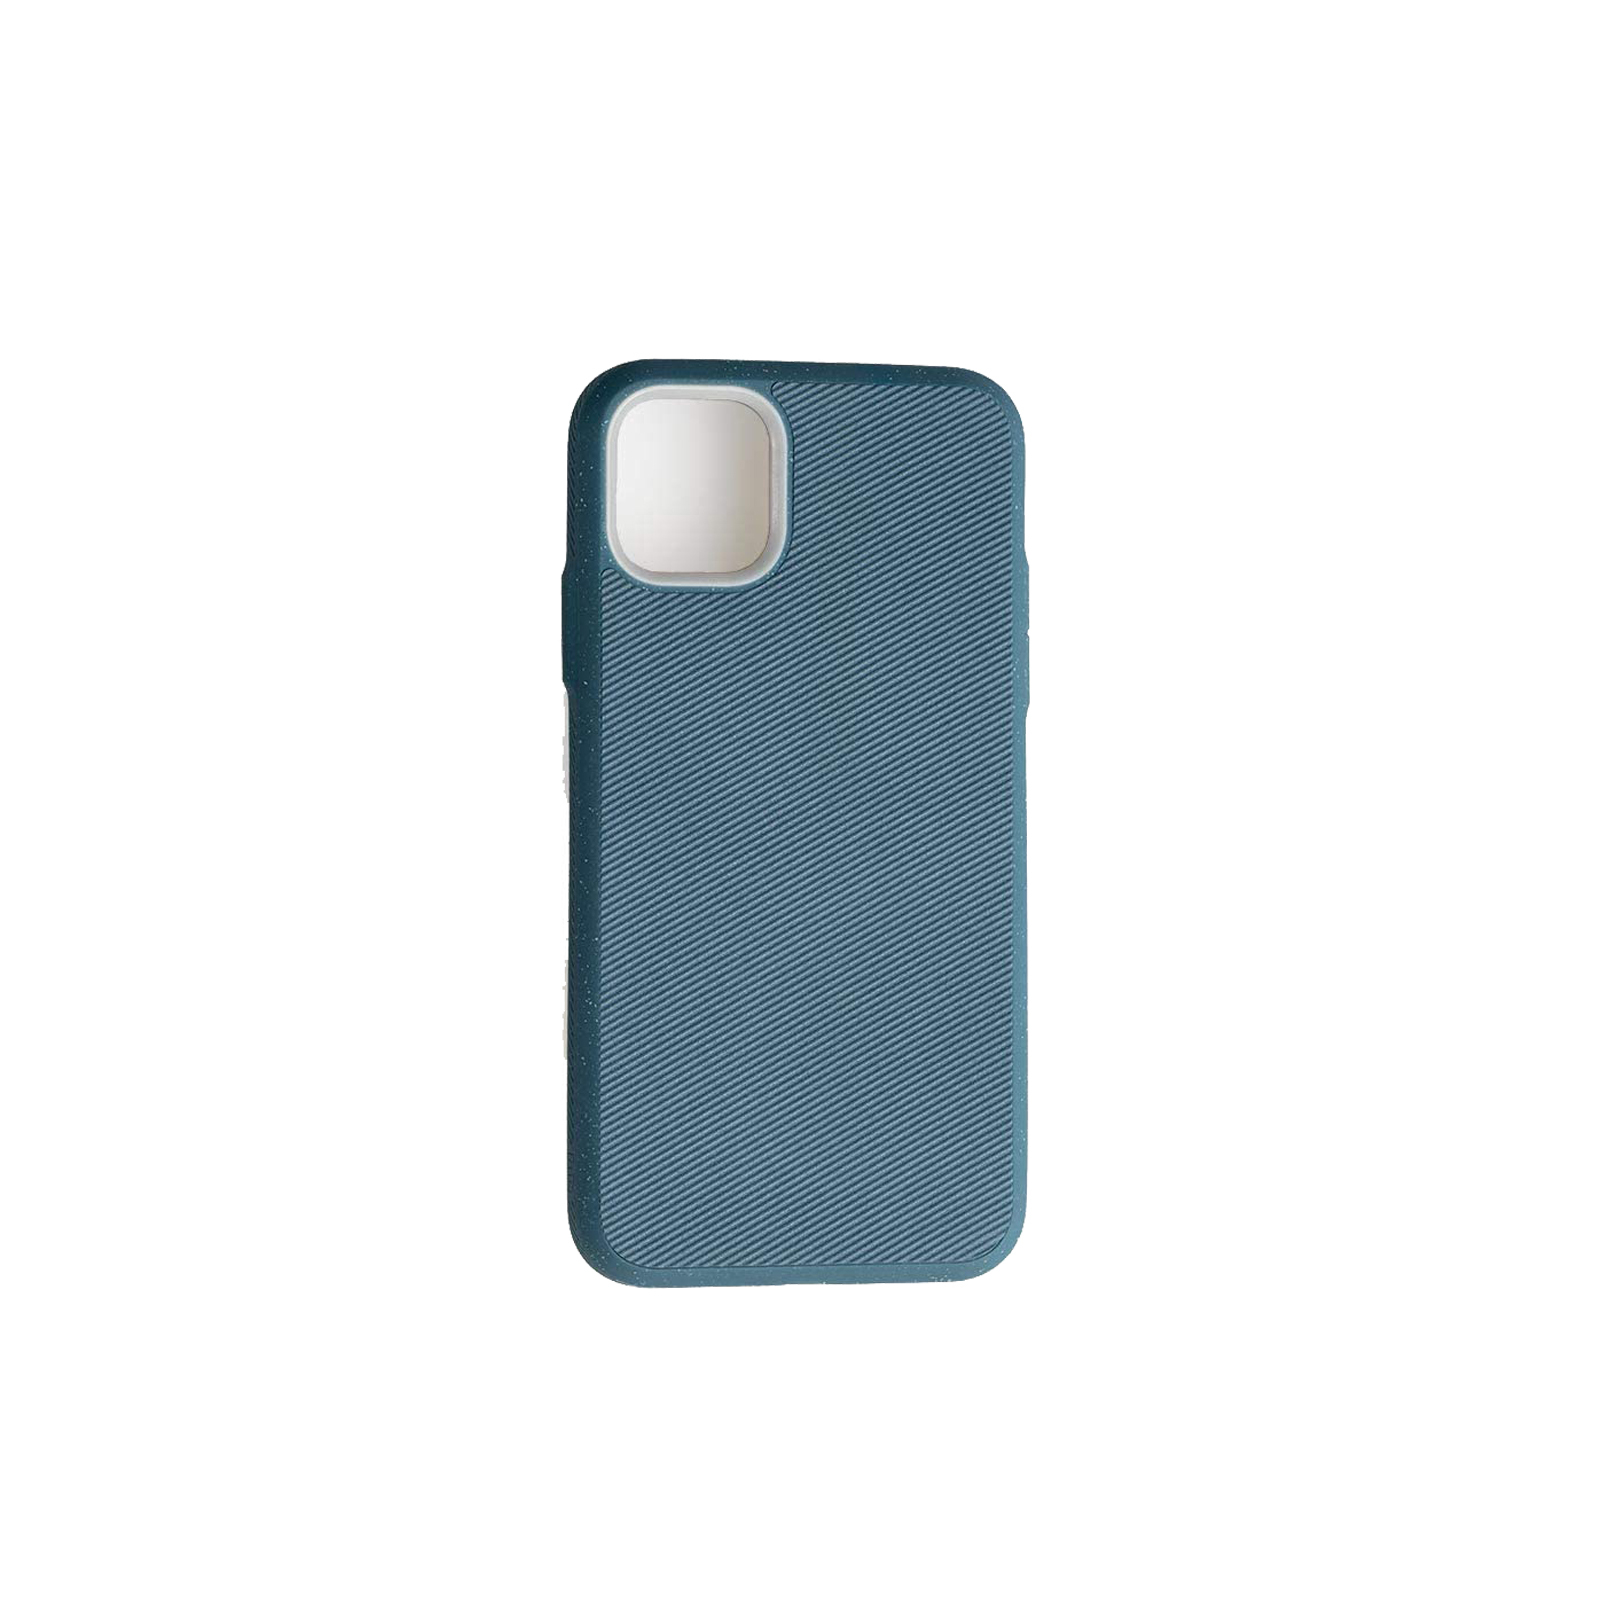 ParadigmGrip iPhone 11 Blue/Yellow Case - Brand New